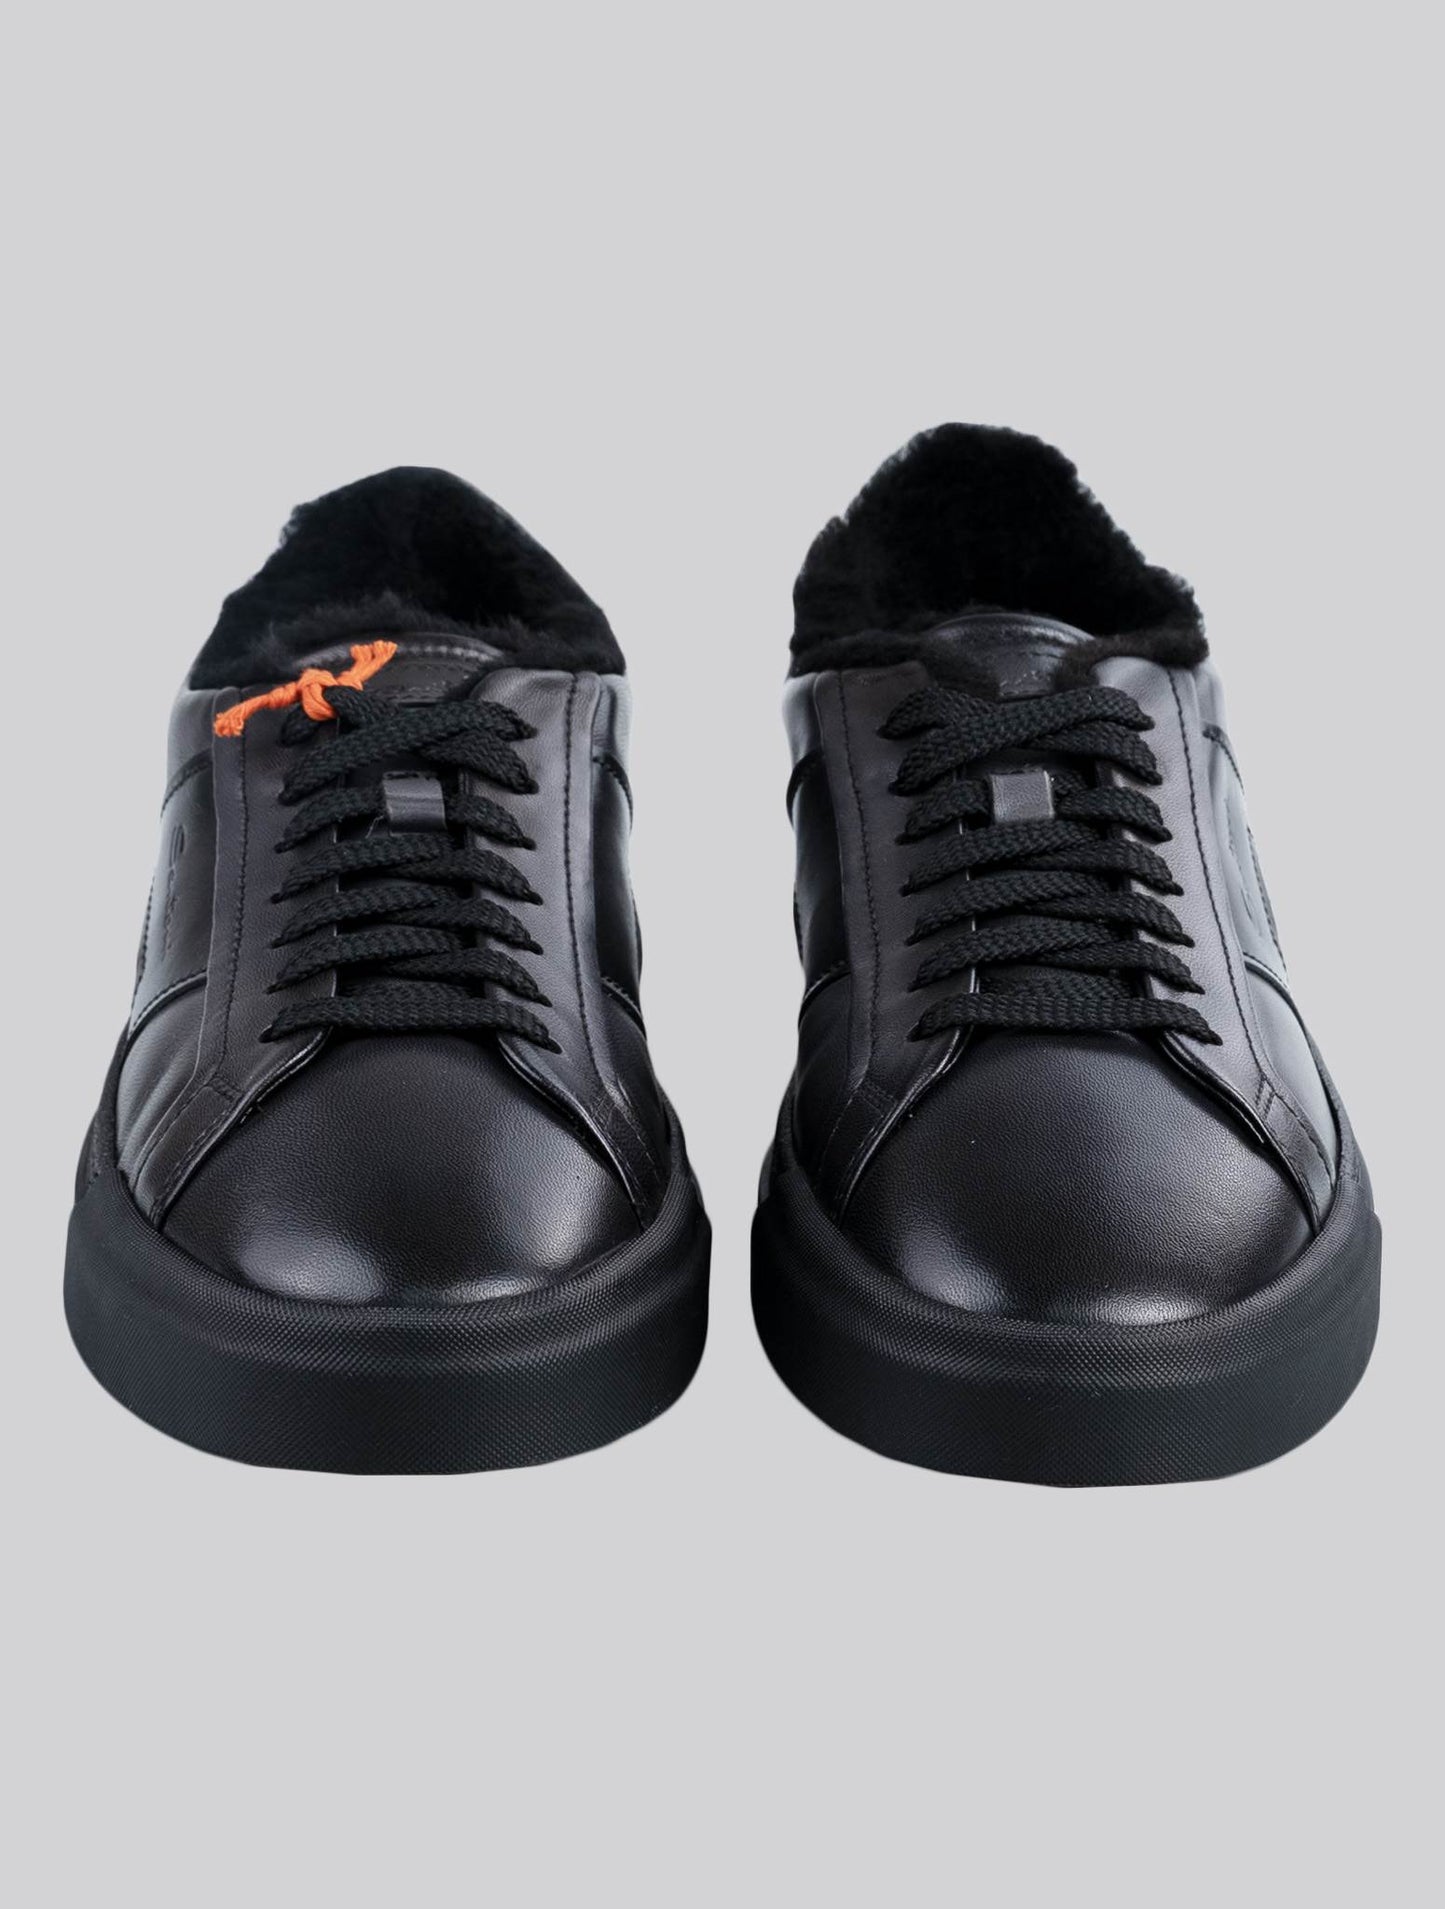 Santoni Black Leather Sheepskin Fur Sneakers